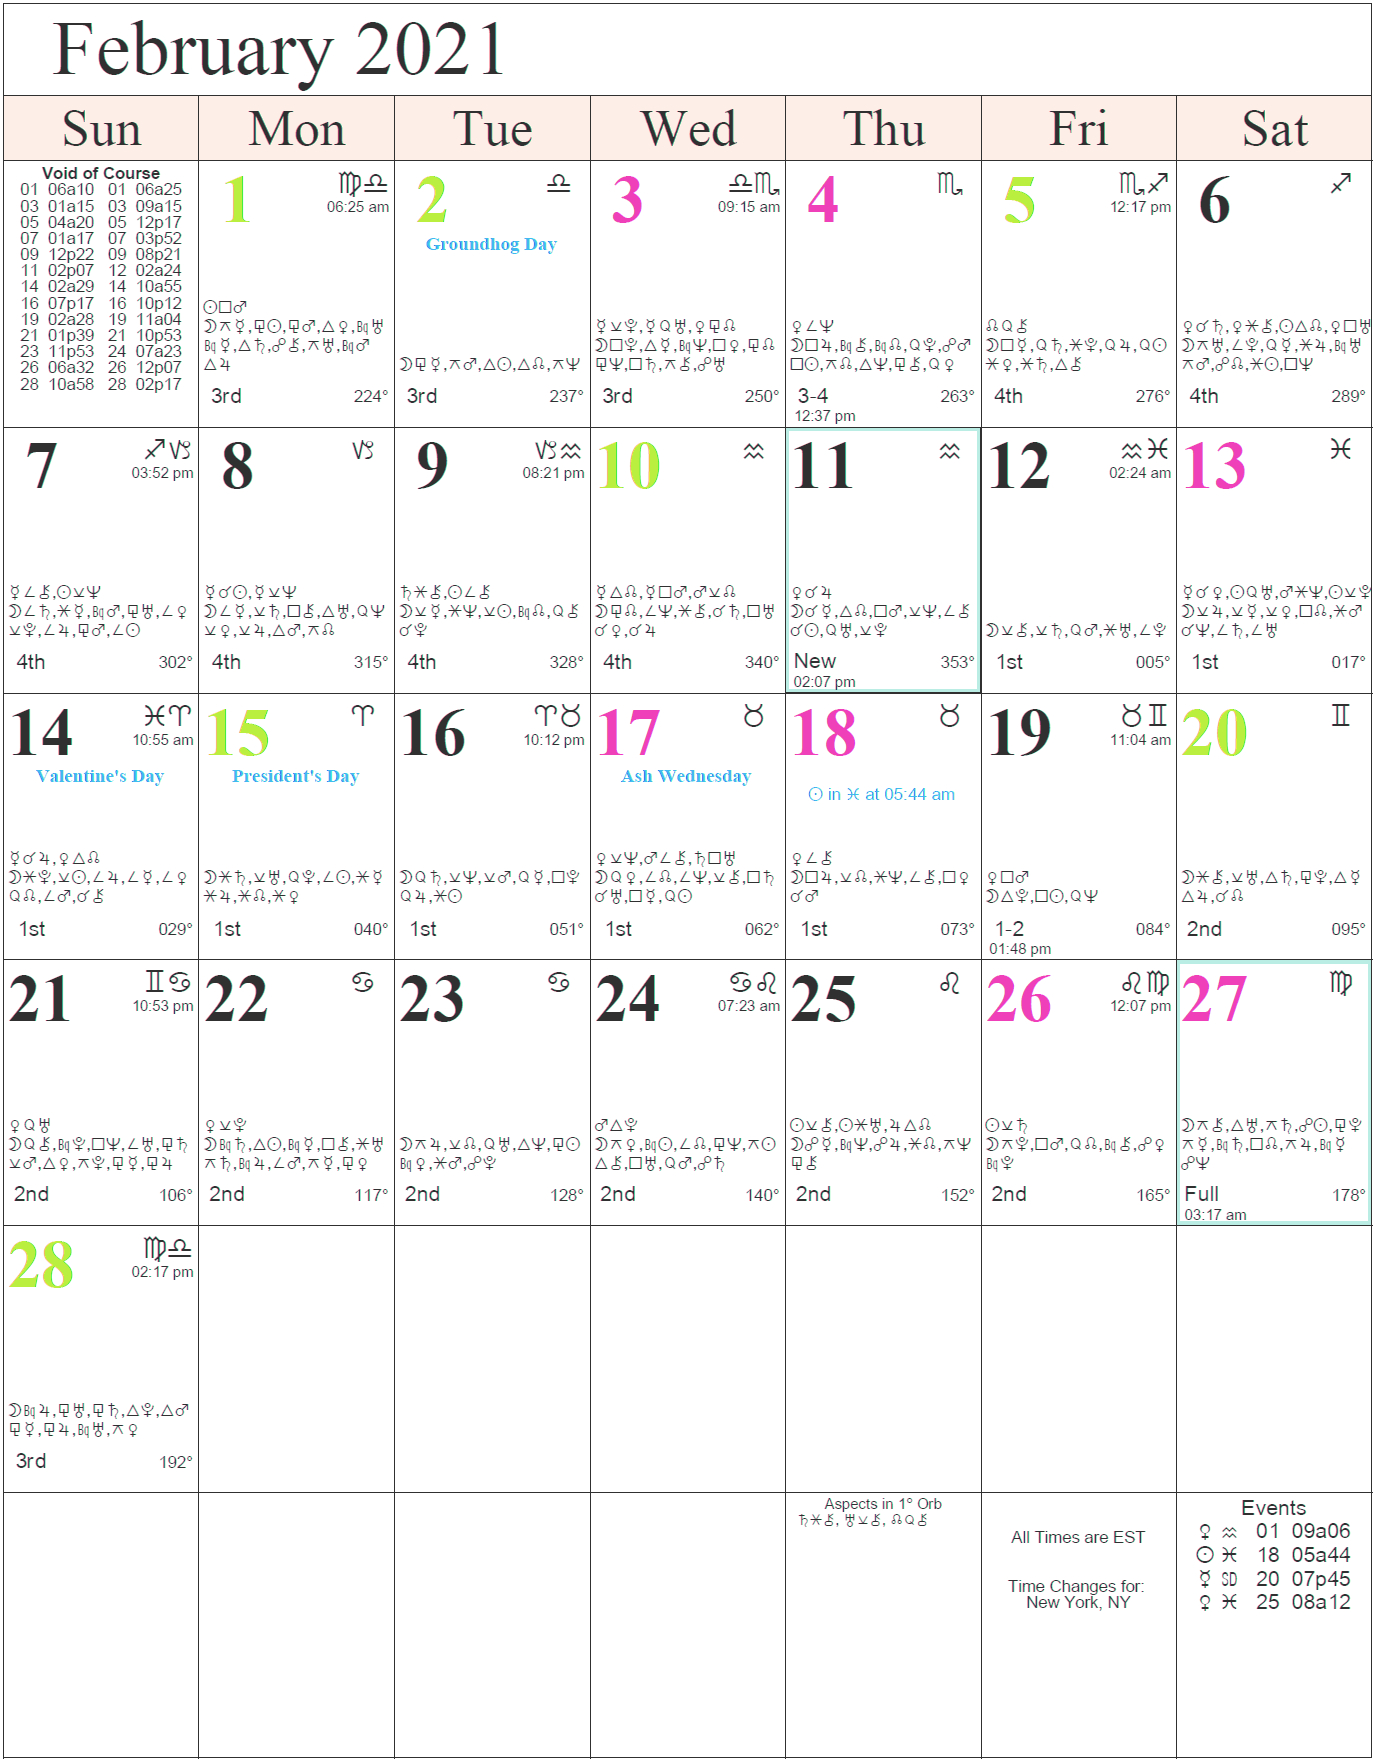 February 2021 Astrology Signs Calendar | Calendar 2021